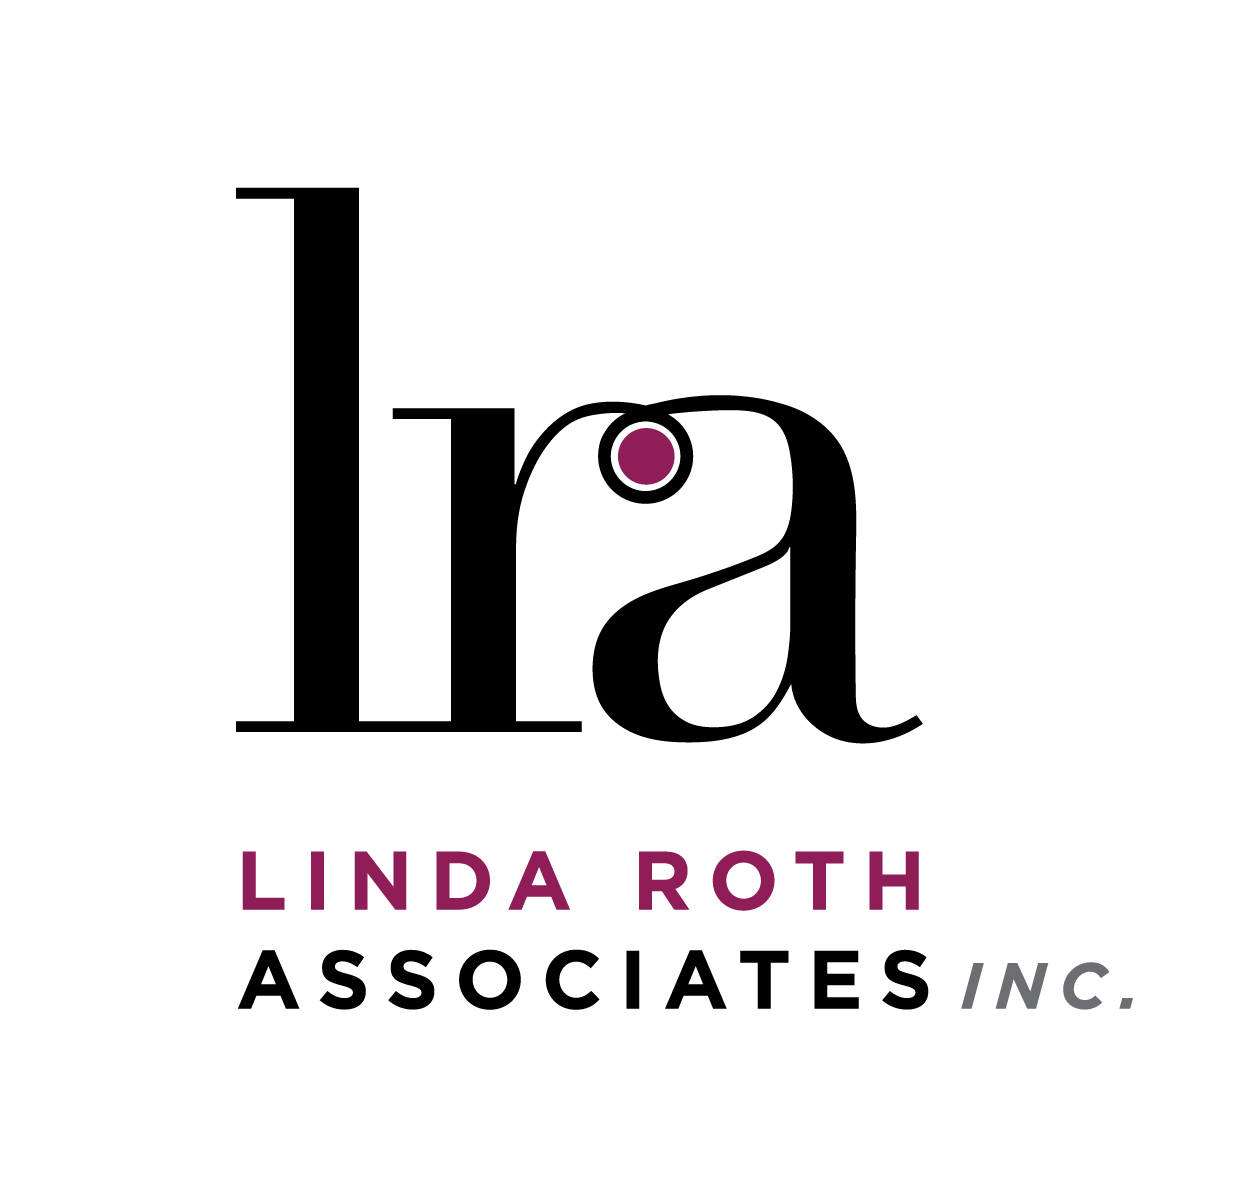 Linda Roth Associates logo